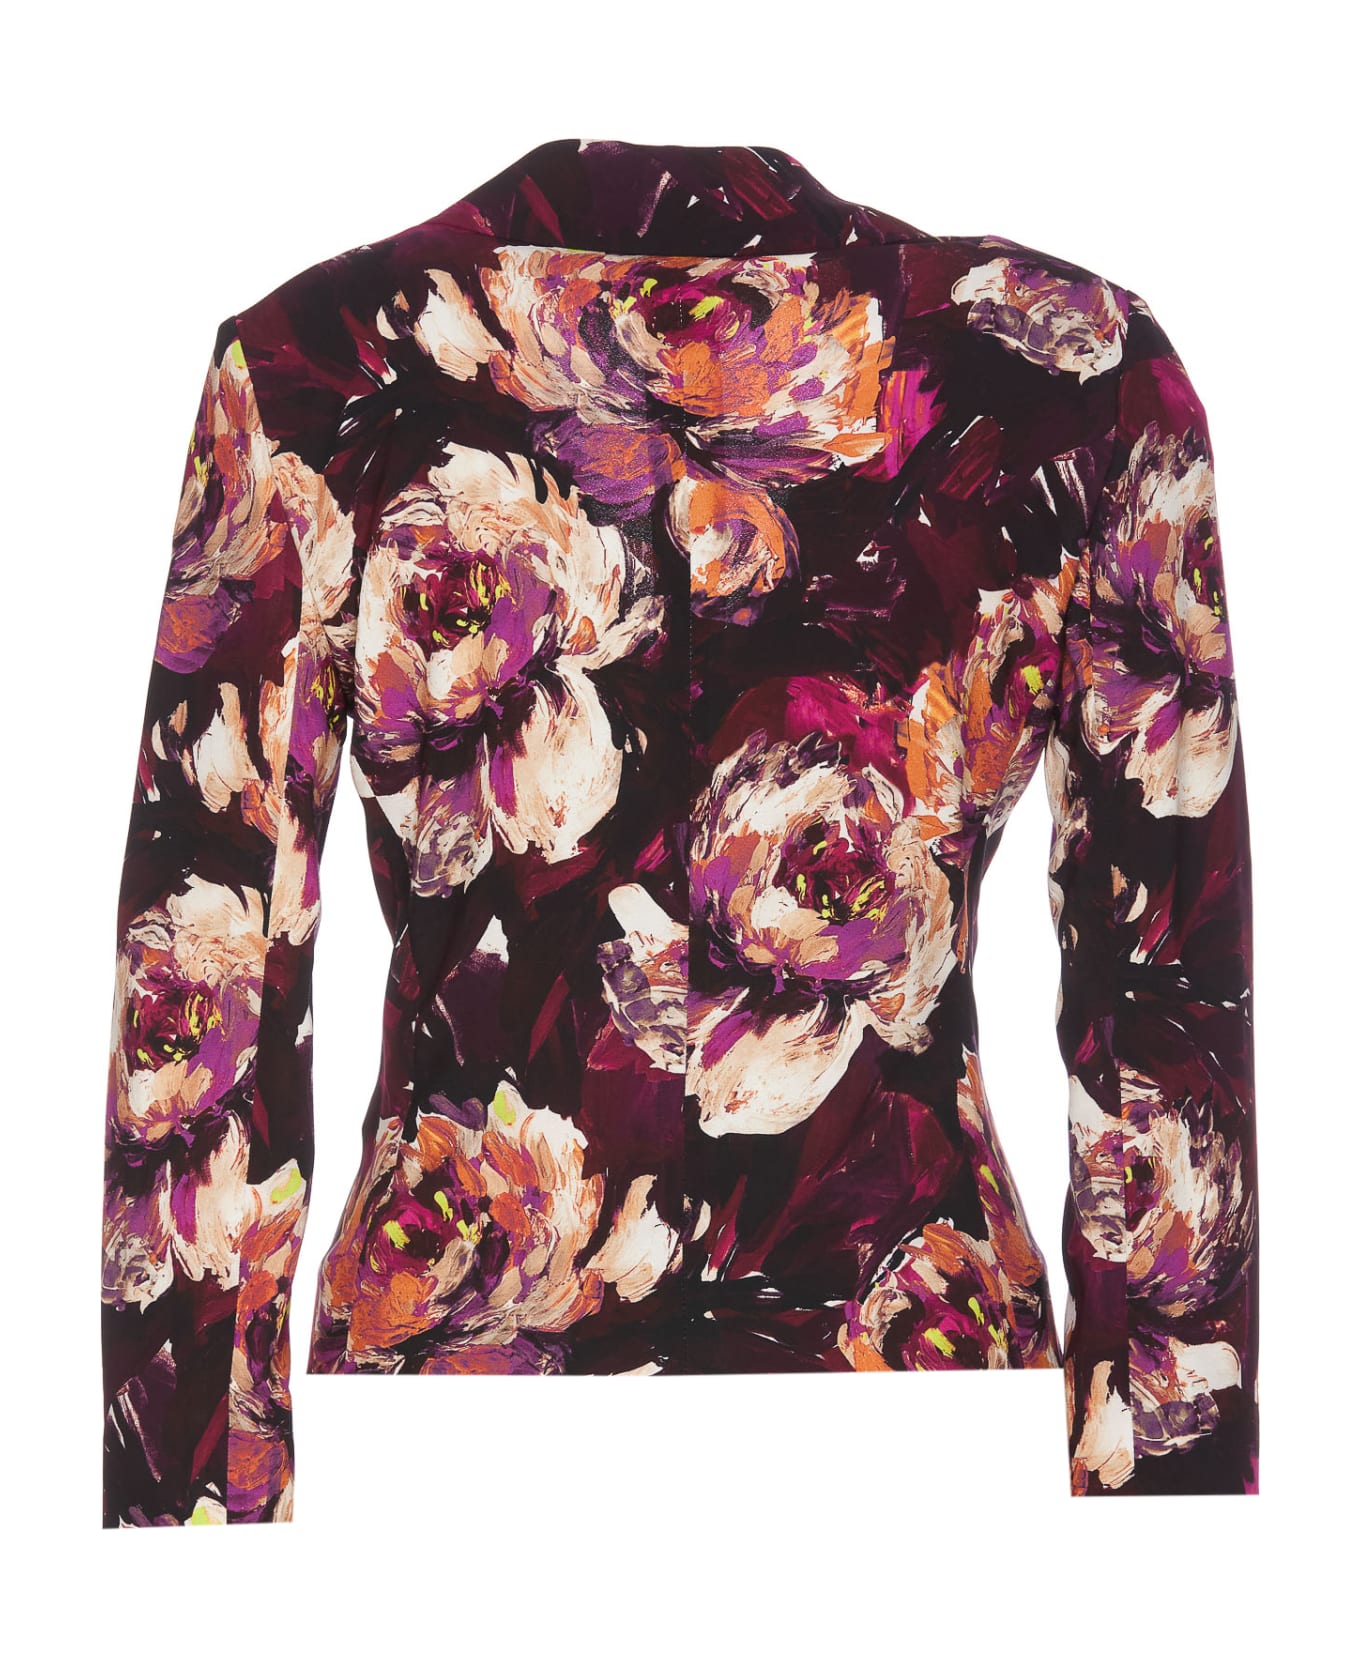 Dolce & Gabbana Peony Print Jacket - Multicolor